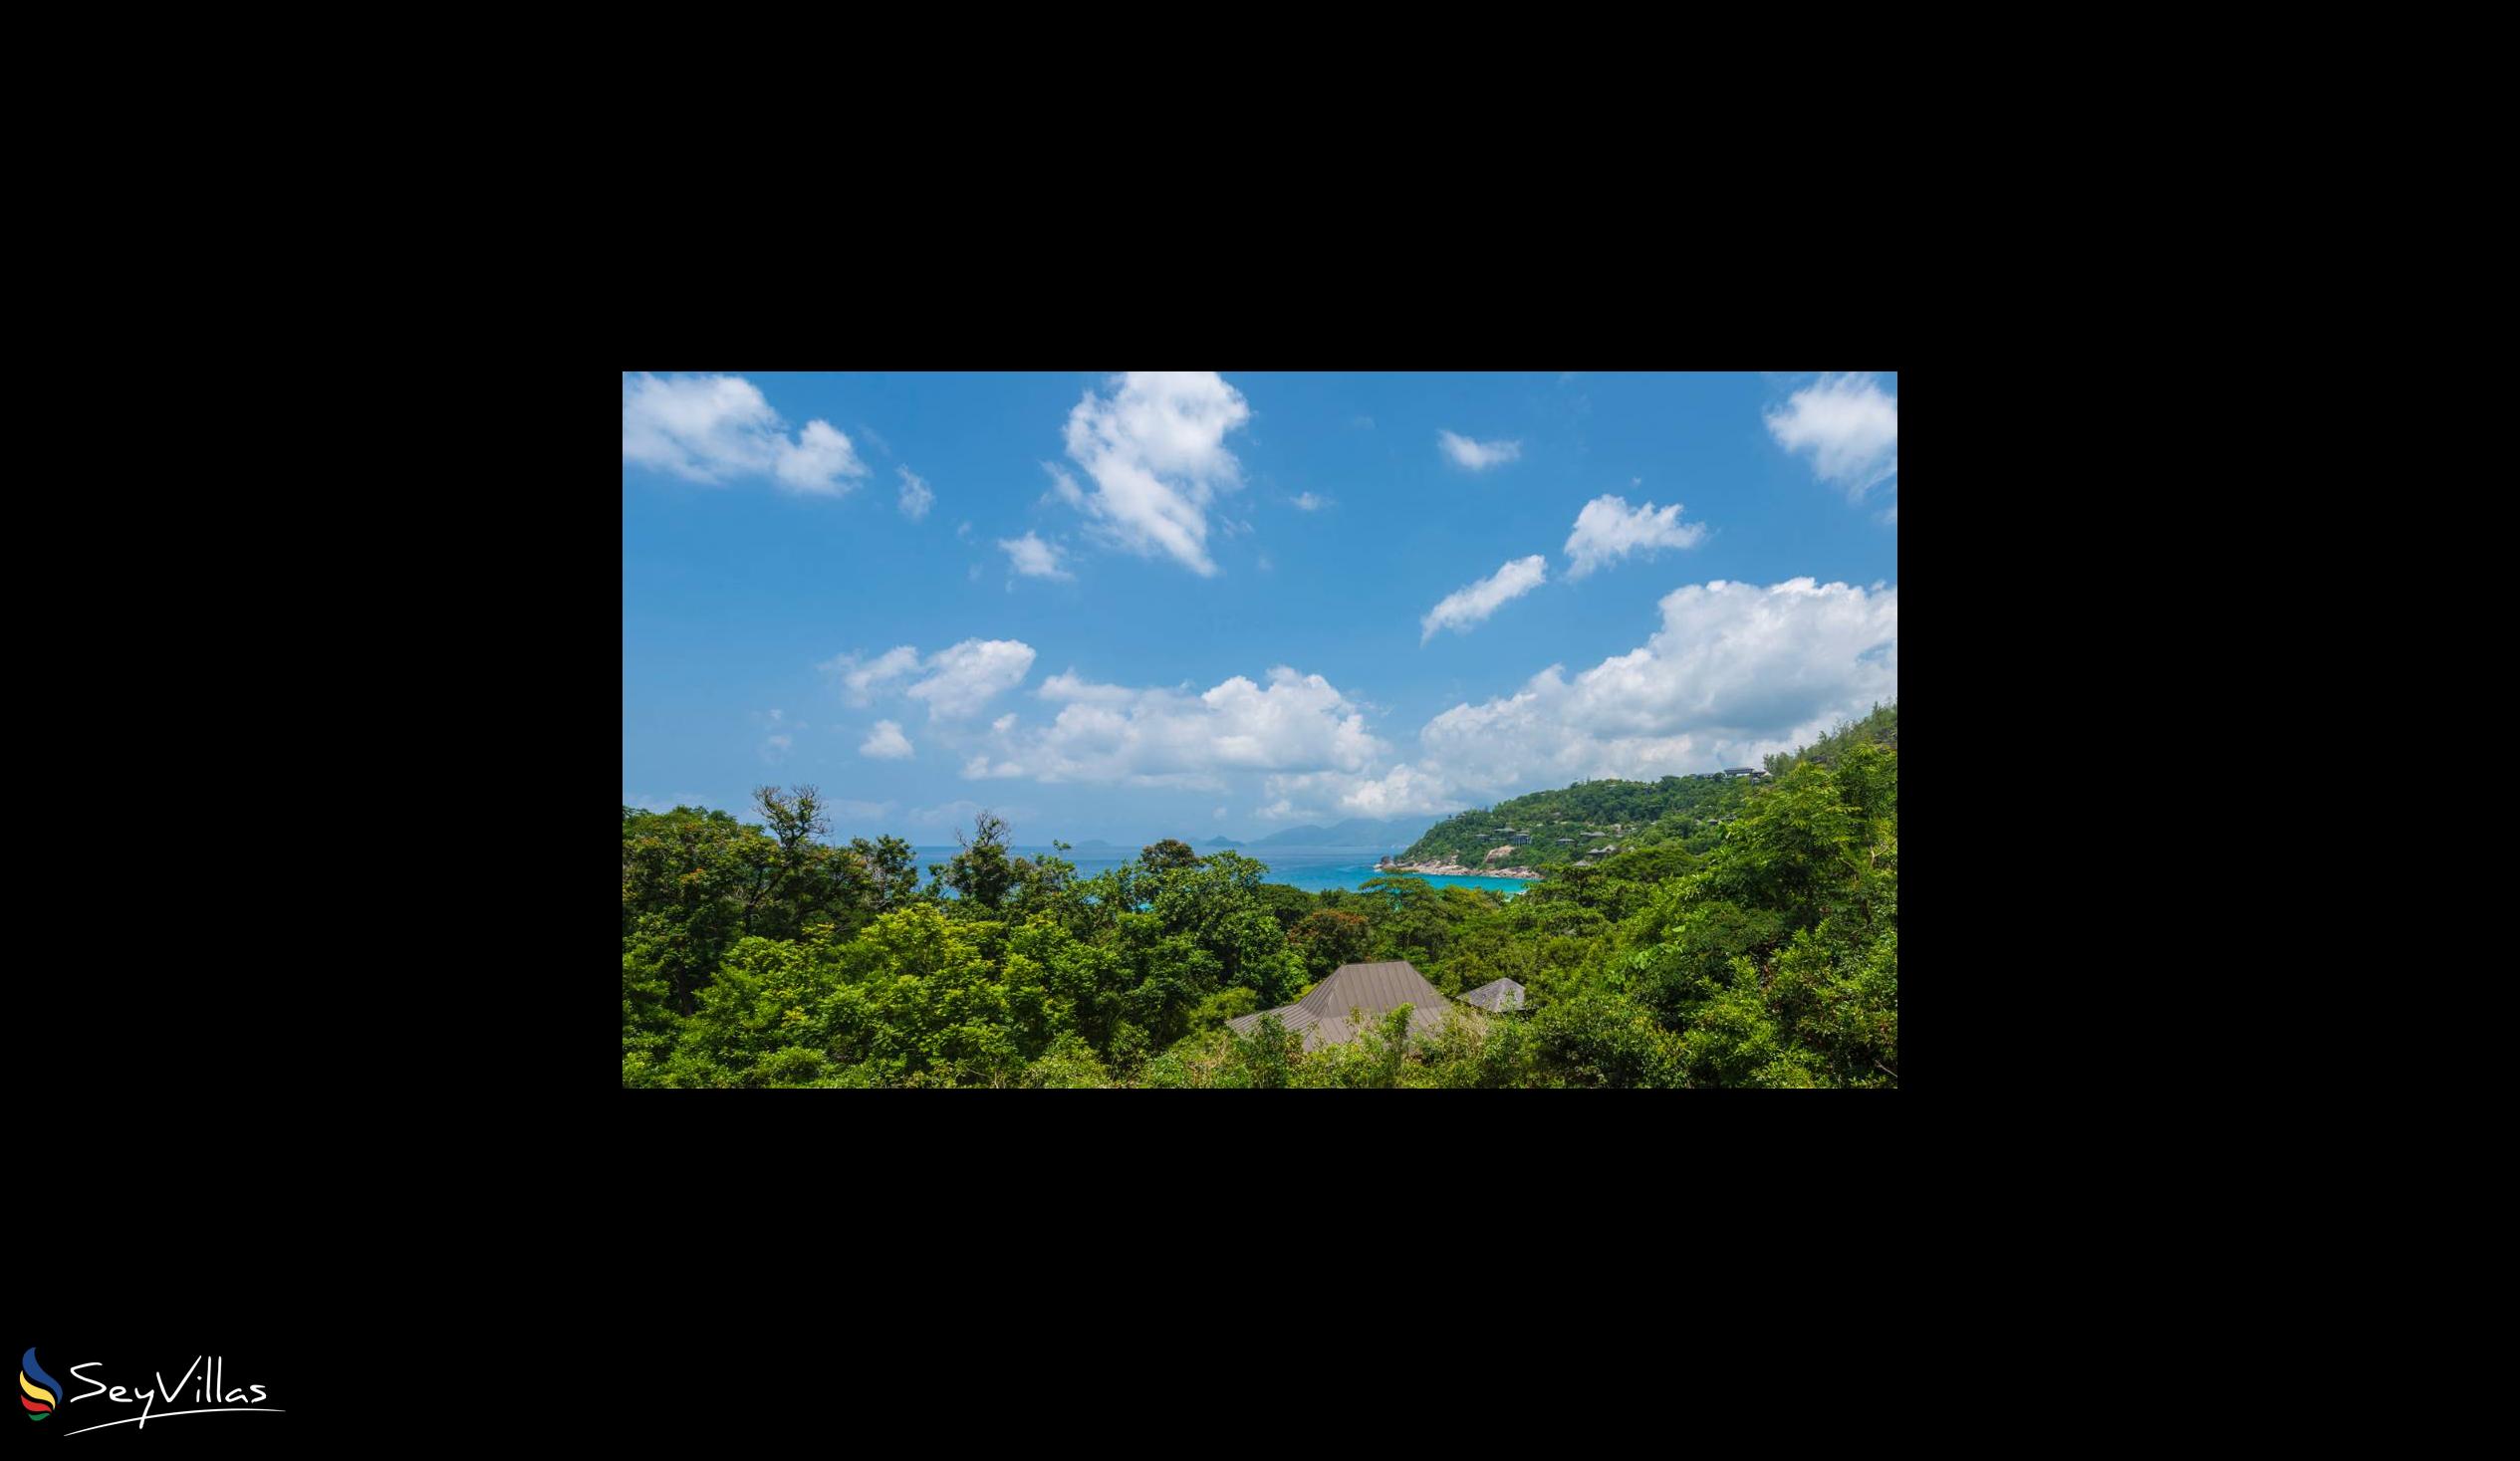 Photo 102: Four Seasons Resort - Ocean View Villa - Mahé (Seychelles)